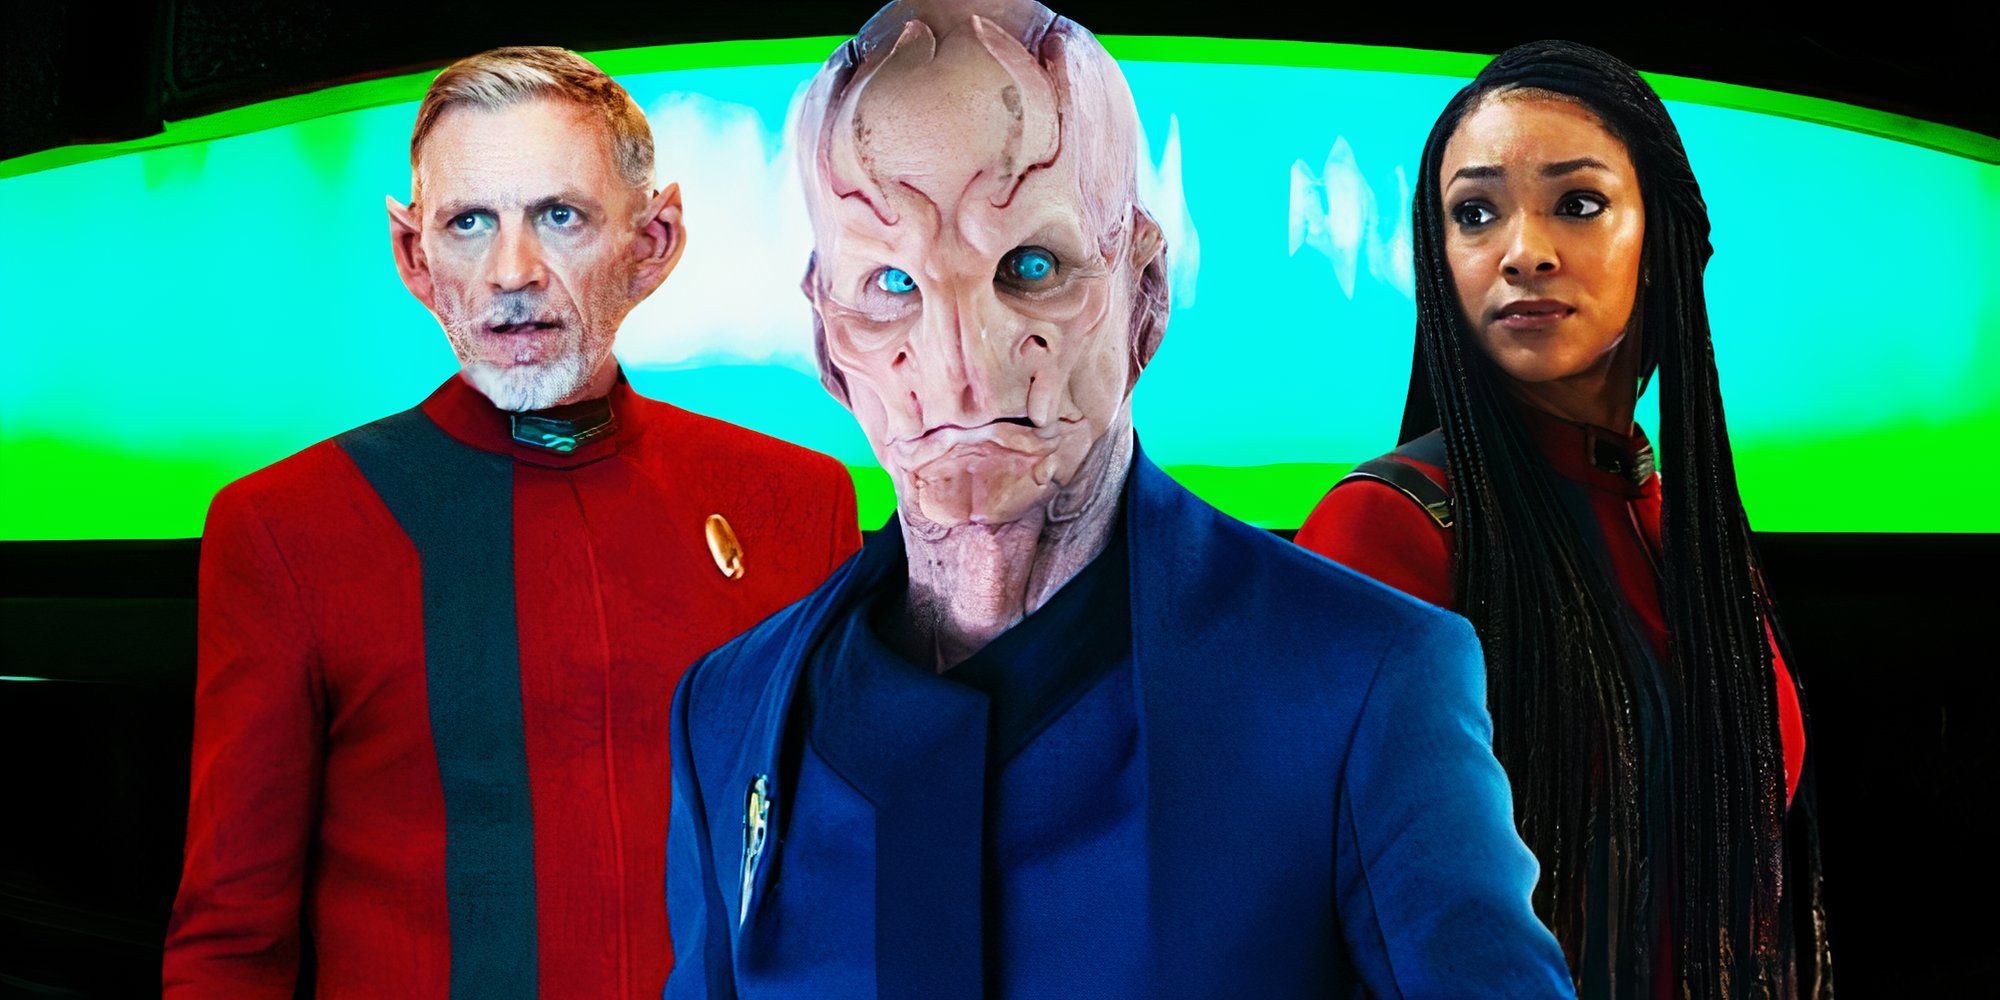 Callum Keith Rennie as Rayner, Doug Jones as Saru, and Sonequa Martin-Green as Burnham in Star Trek: Discovery season 5, episode 9